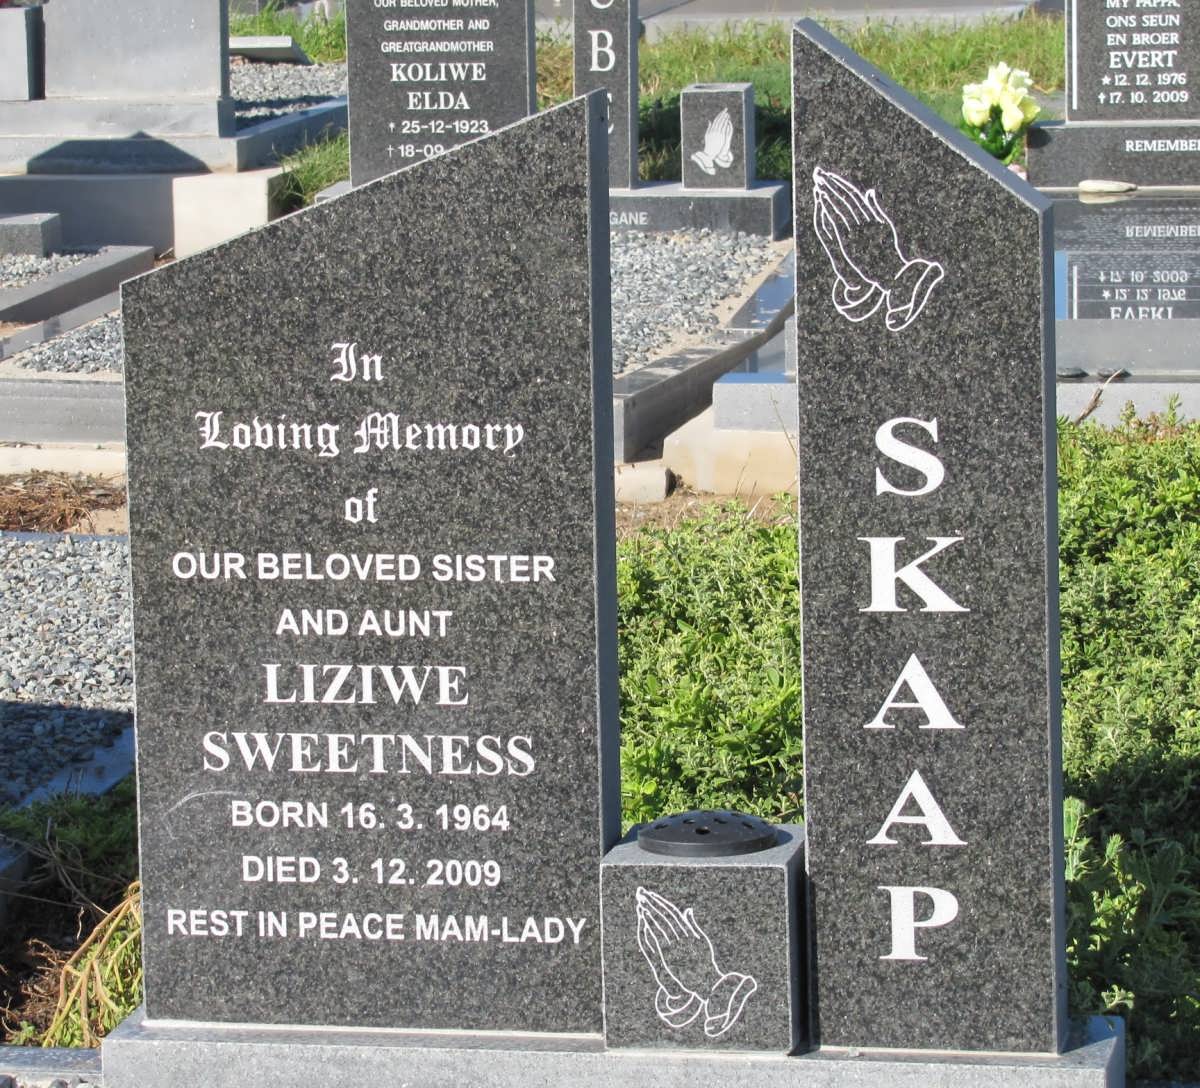 SKAAP Liziwe Sweetness 1964-2009